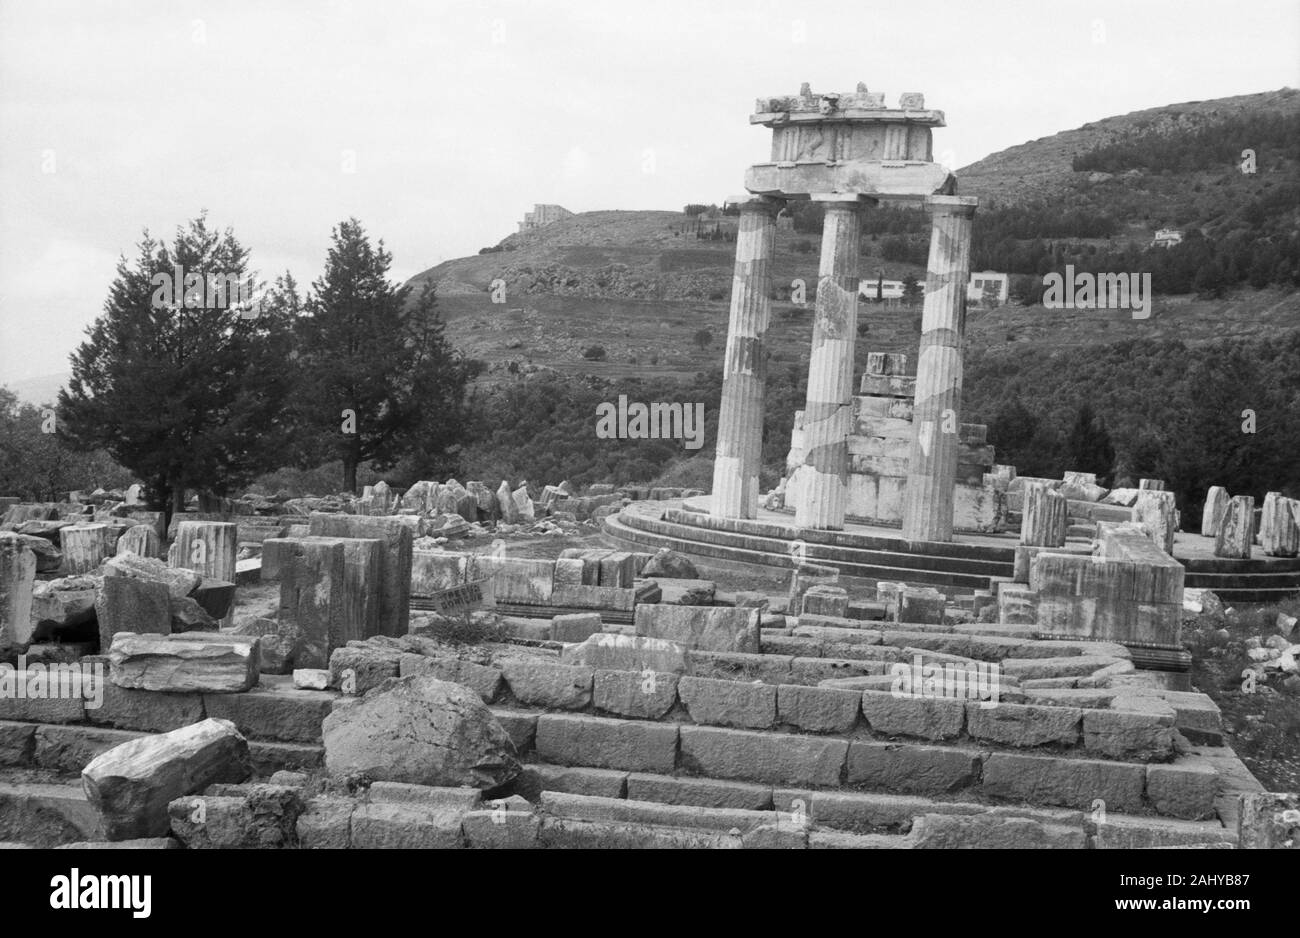 Blick auf das antike Bauwerk der Tholos von Delphi, Griechenland 1950er Jahre. View of the ancient building of the Tholos of Delphi, Greece 1950s. Stock Photo